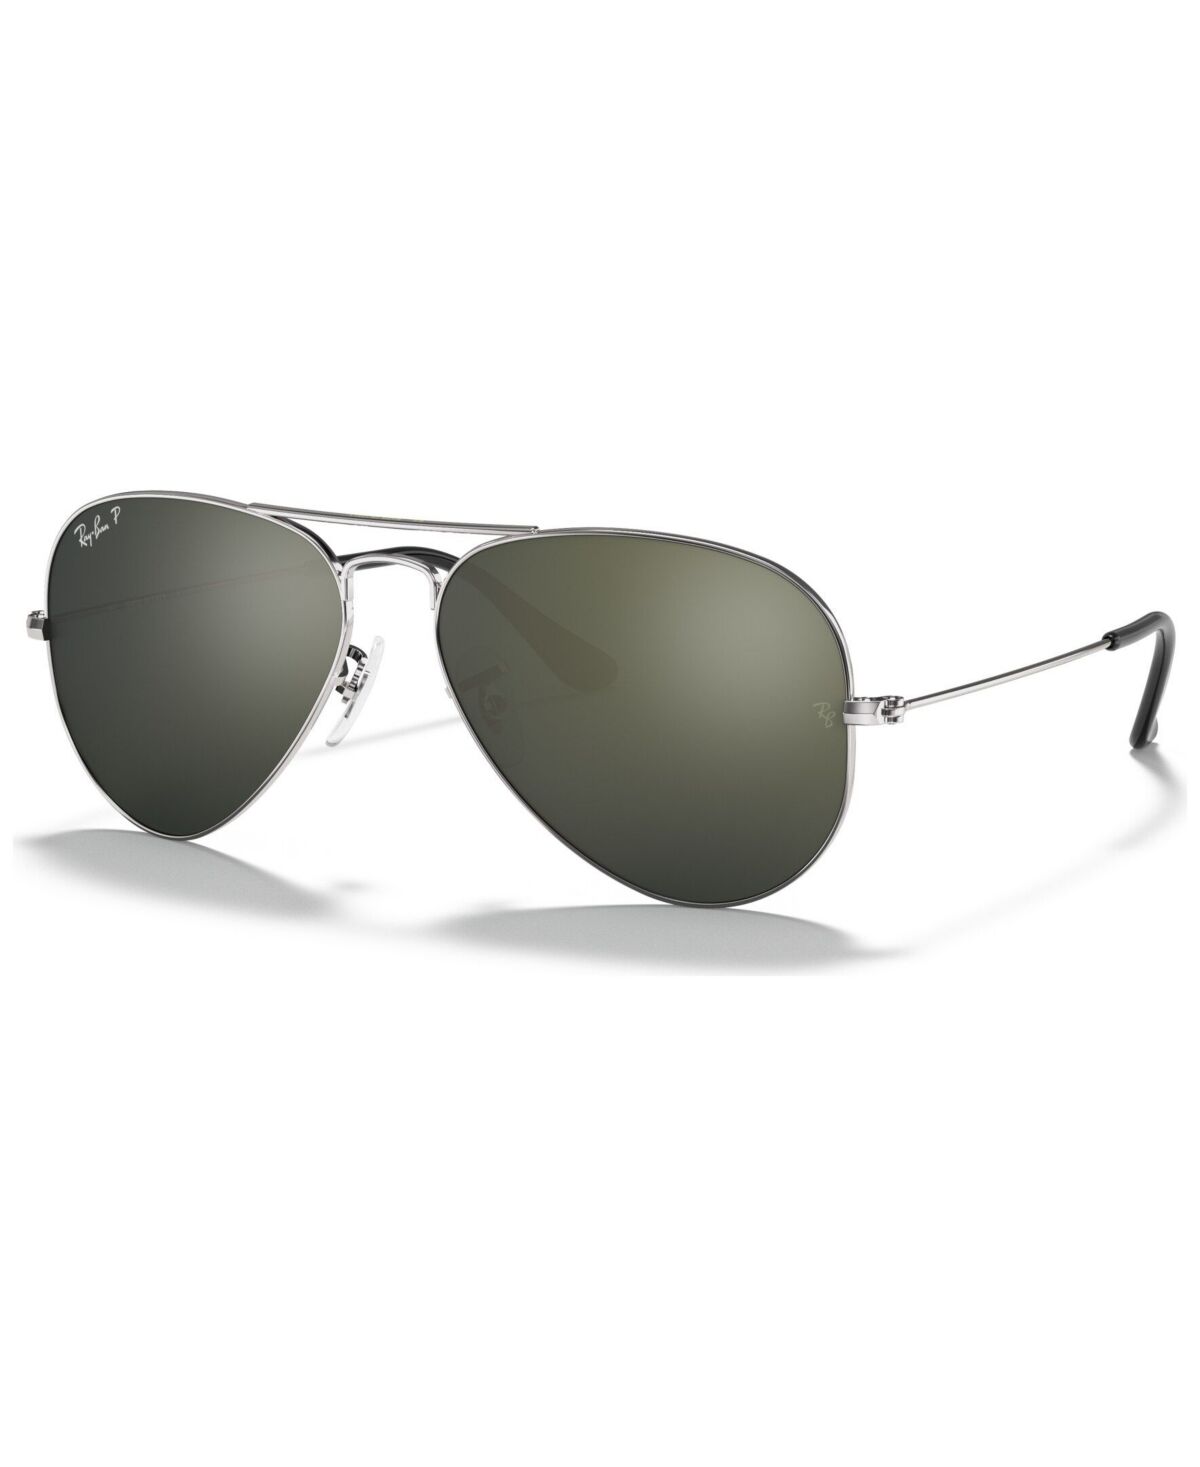 Ray-Ban Polarized Sunglasses, RB3025 Aviator Mirror - SILVER/SILVER MIRROR POLAR